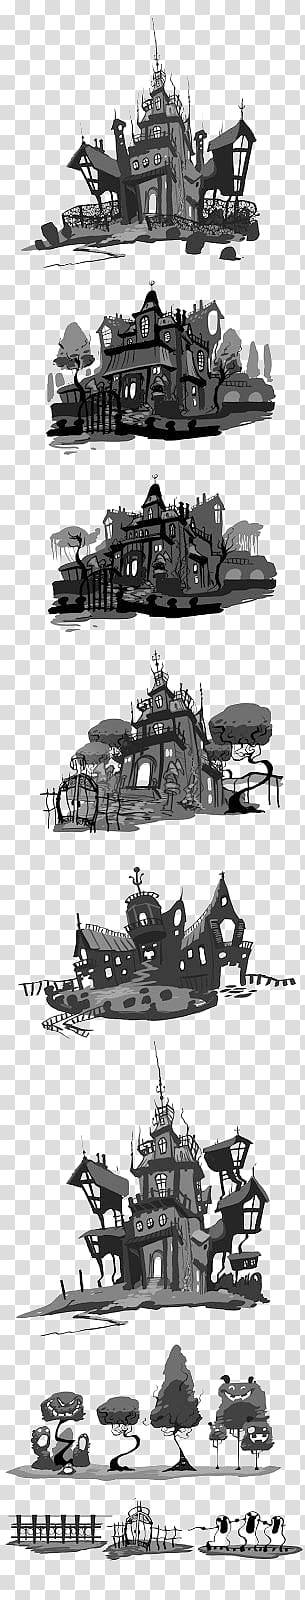 Visual arts Black and white Concept art Illustration, castle transparent background PNG clipart